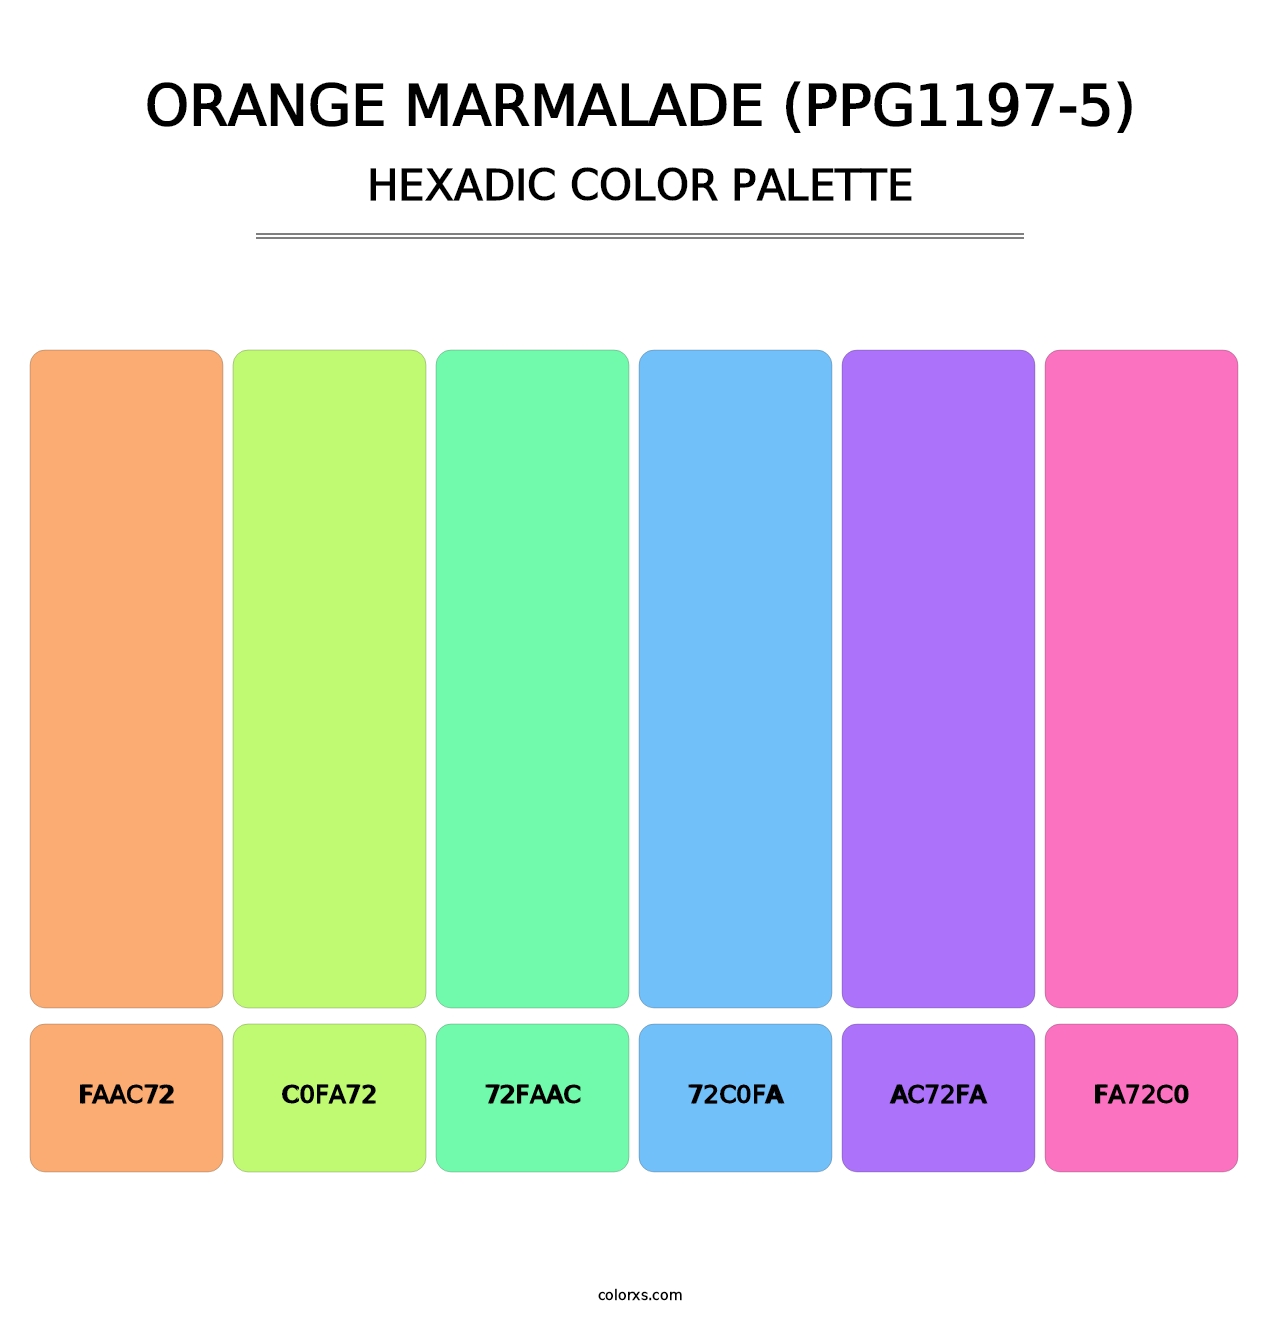 Orange Marmalade (PPG1197-5) - Hexadic Color Palette